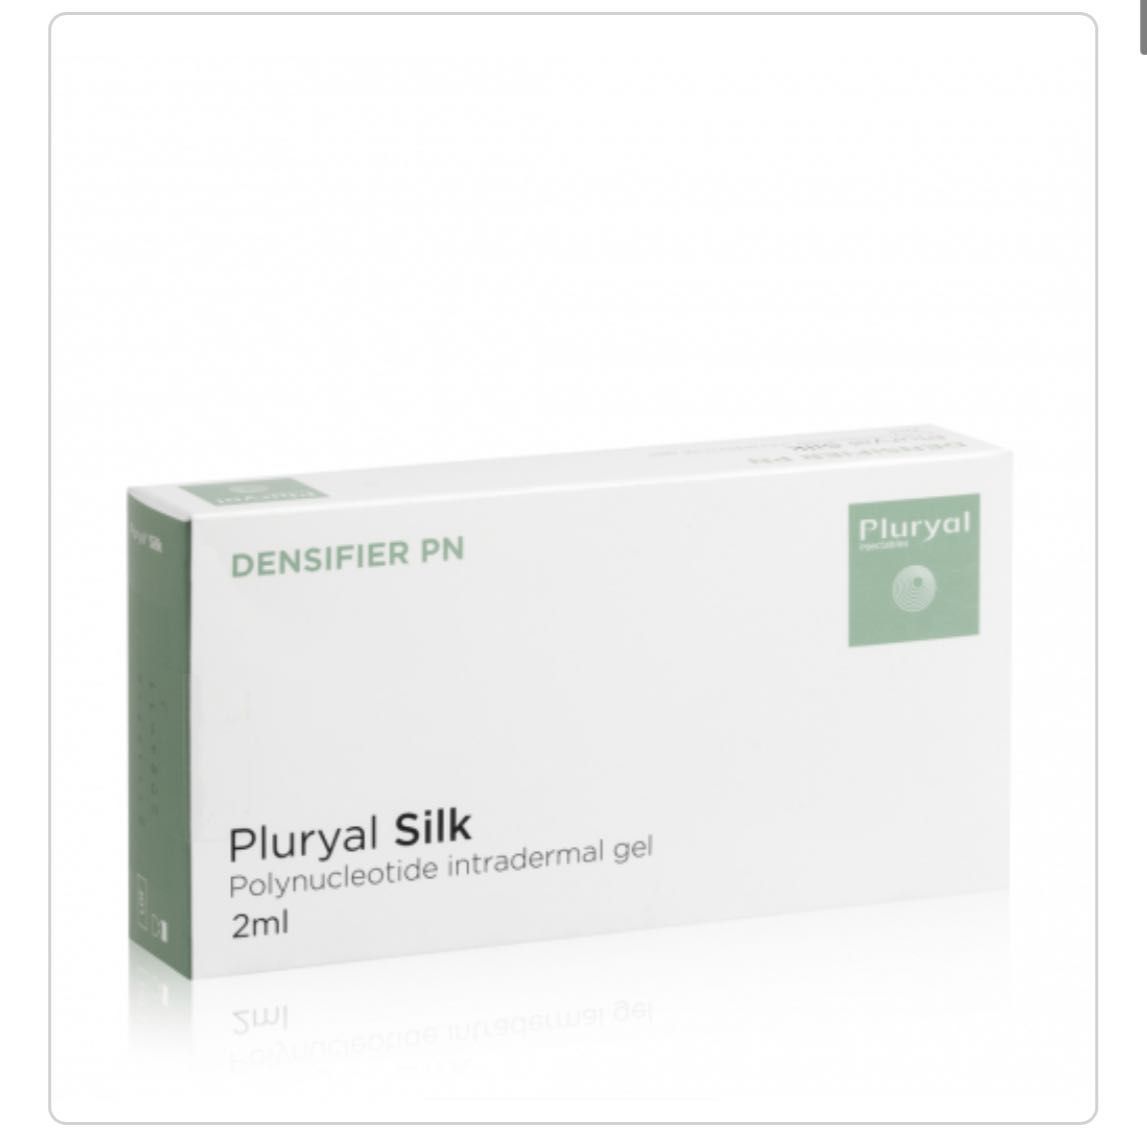 Portfolio usługi Pluryal Silk